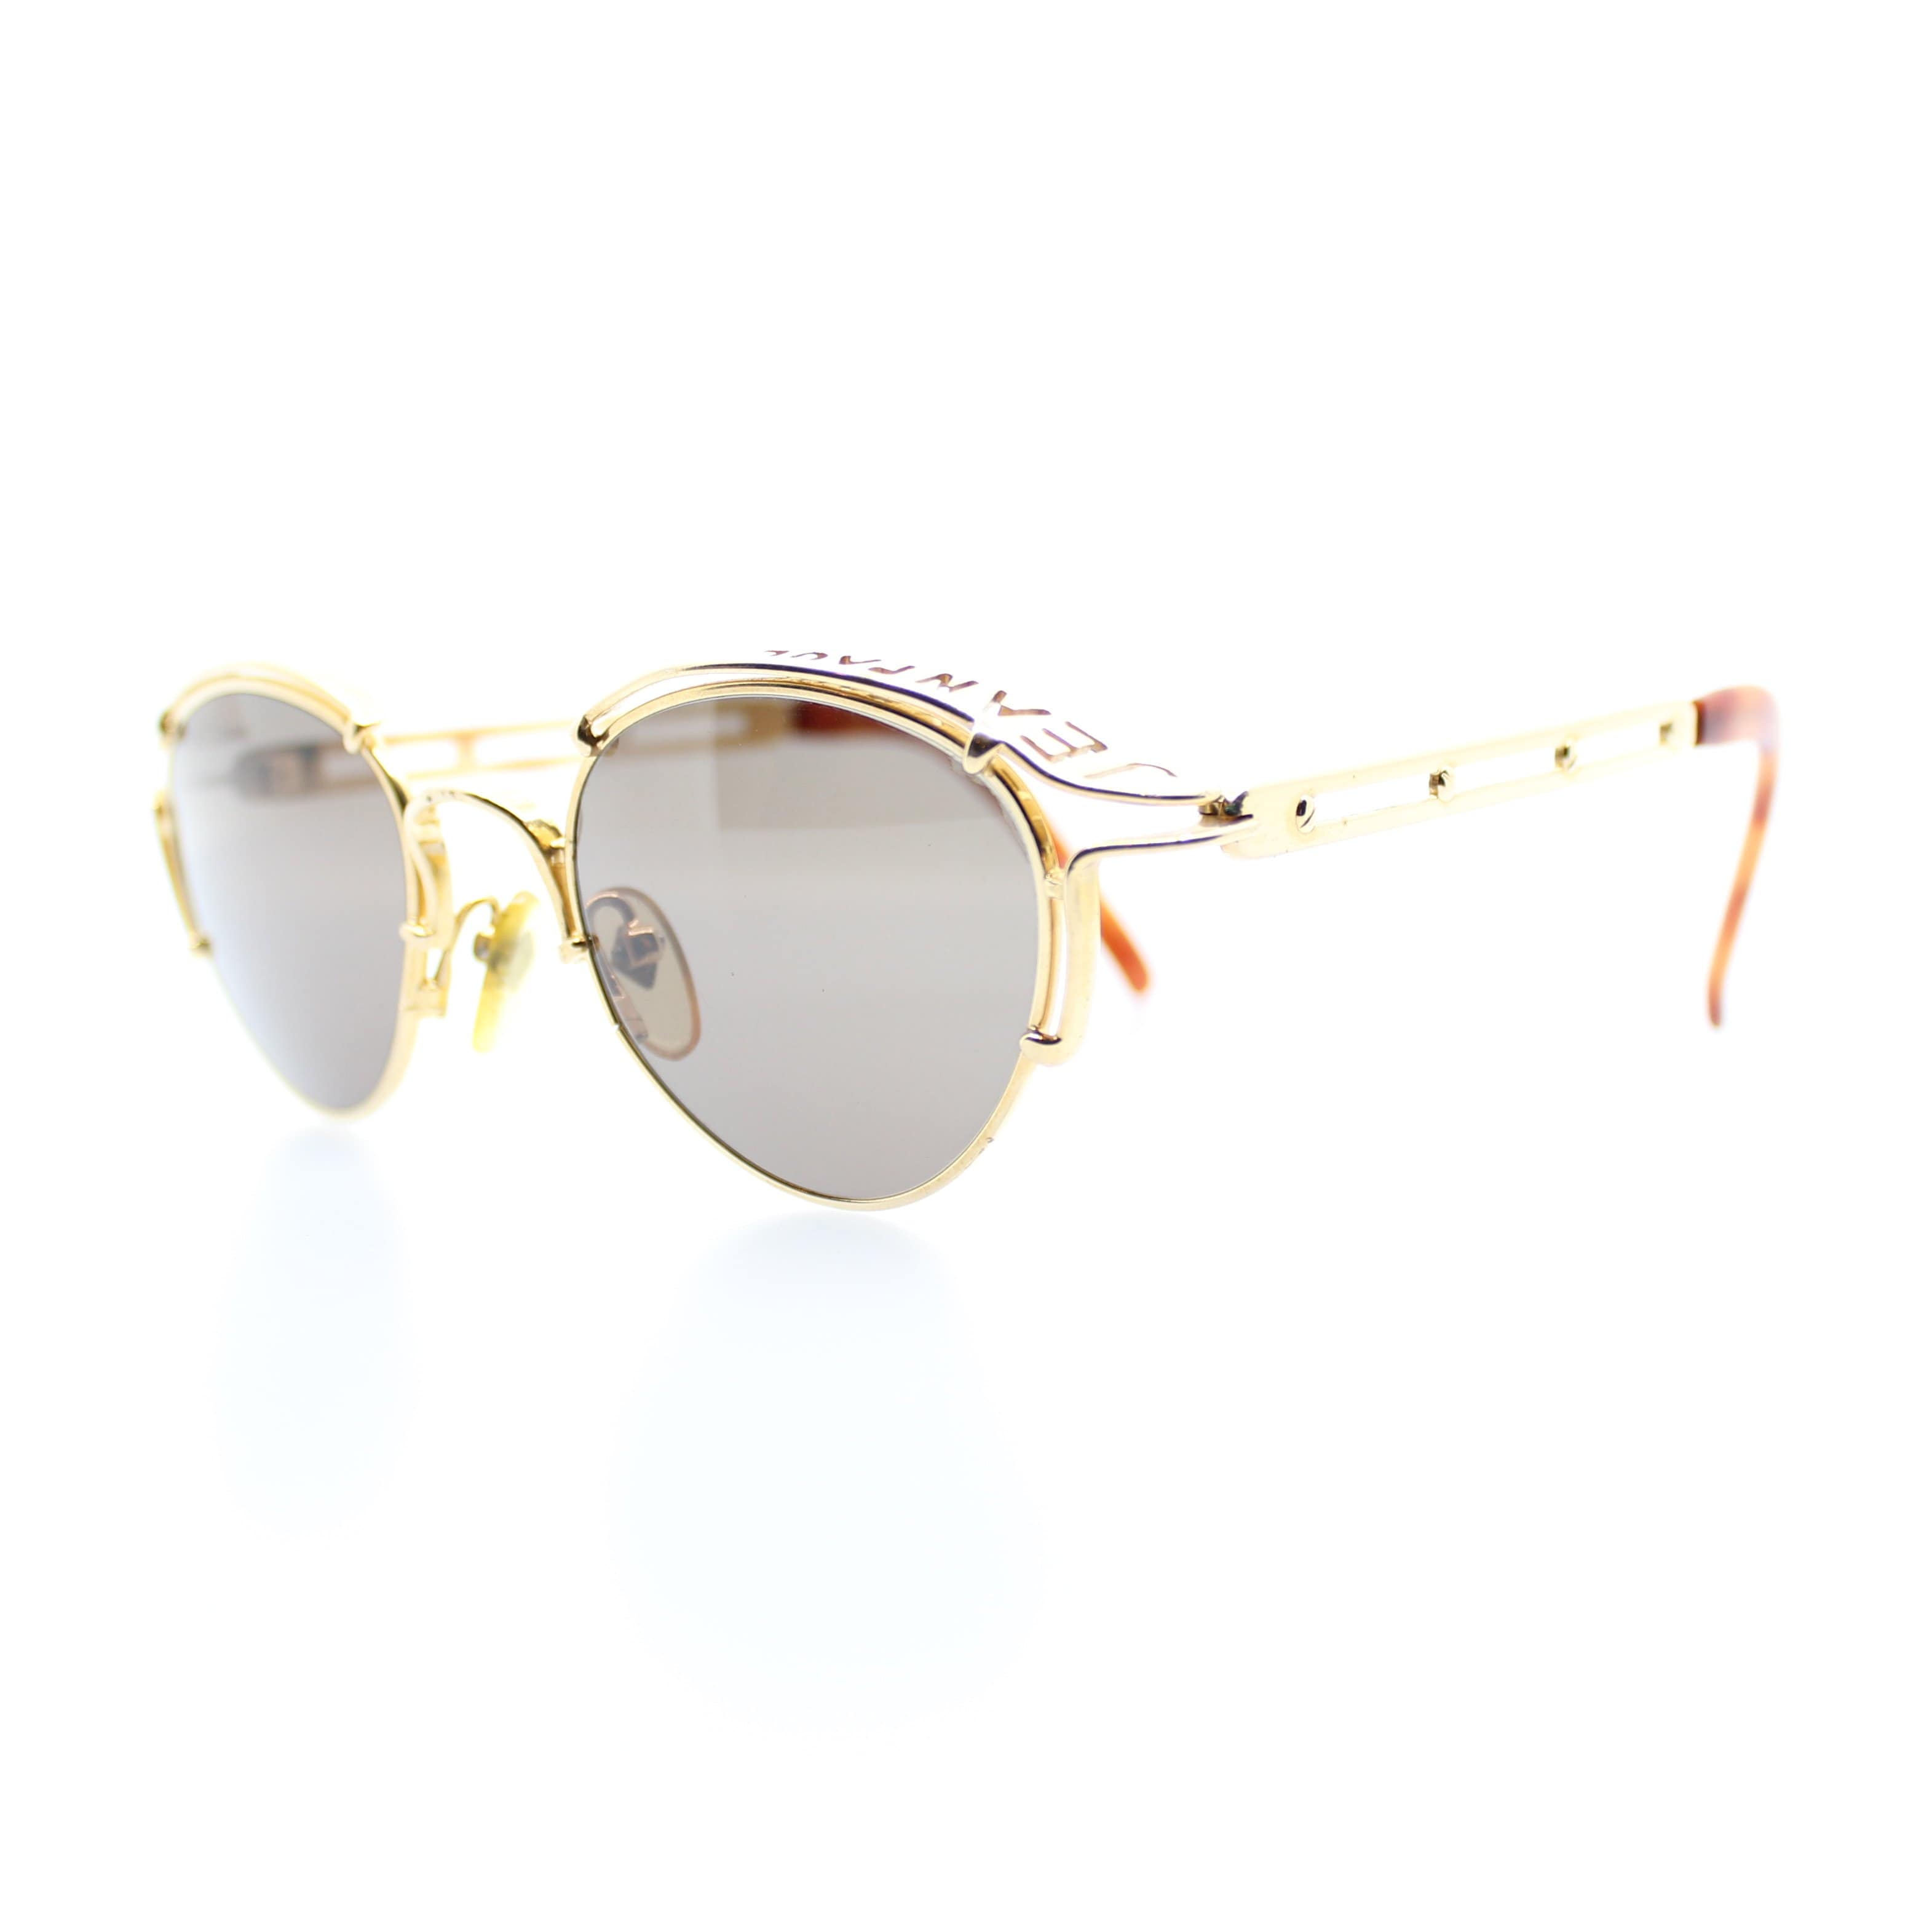 Vintage Jean Paul Gaultier 56-5102 Sunglasses